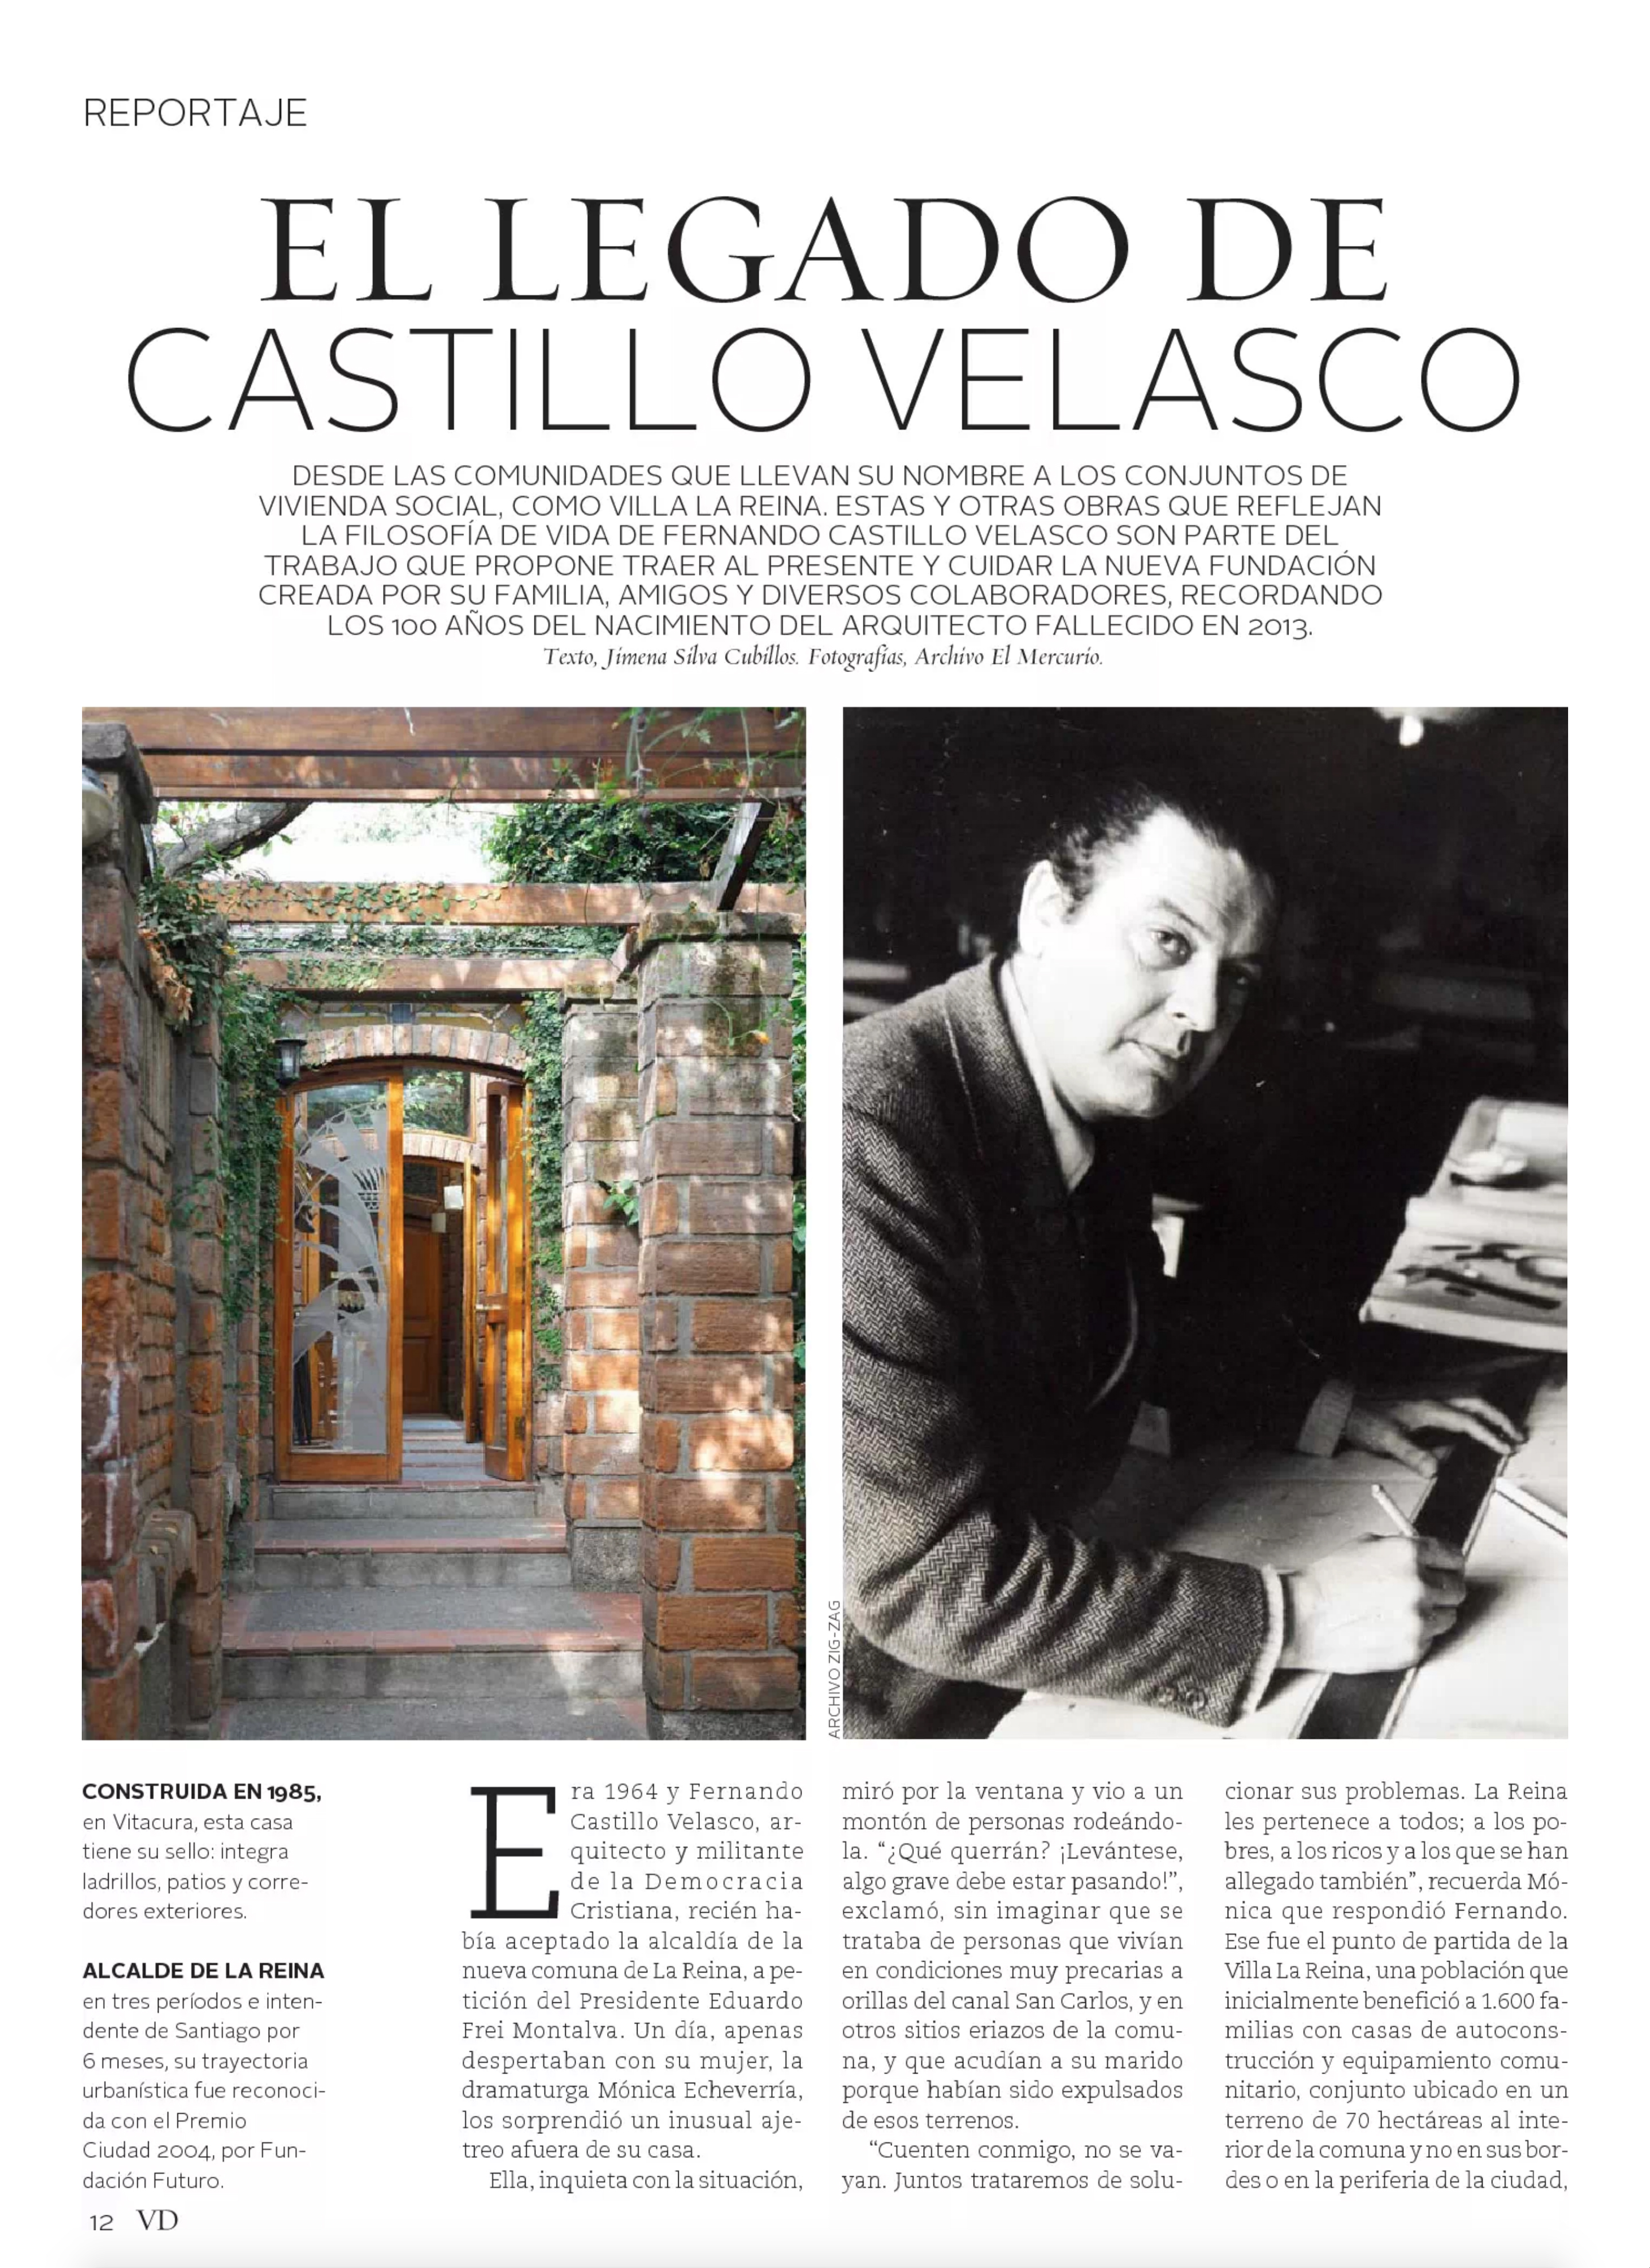 18-09-15_El_Legado_de_Castillo_Velasco_Revista_VD.jpg